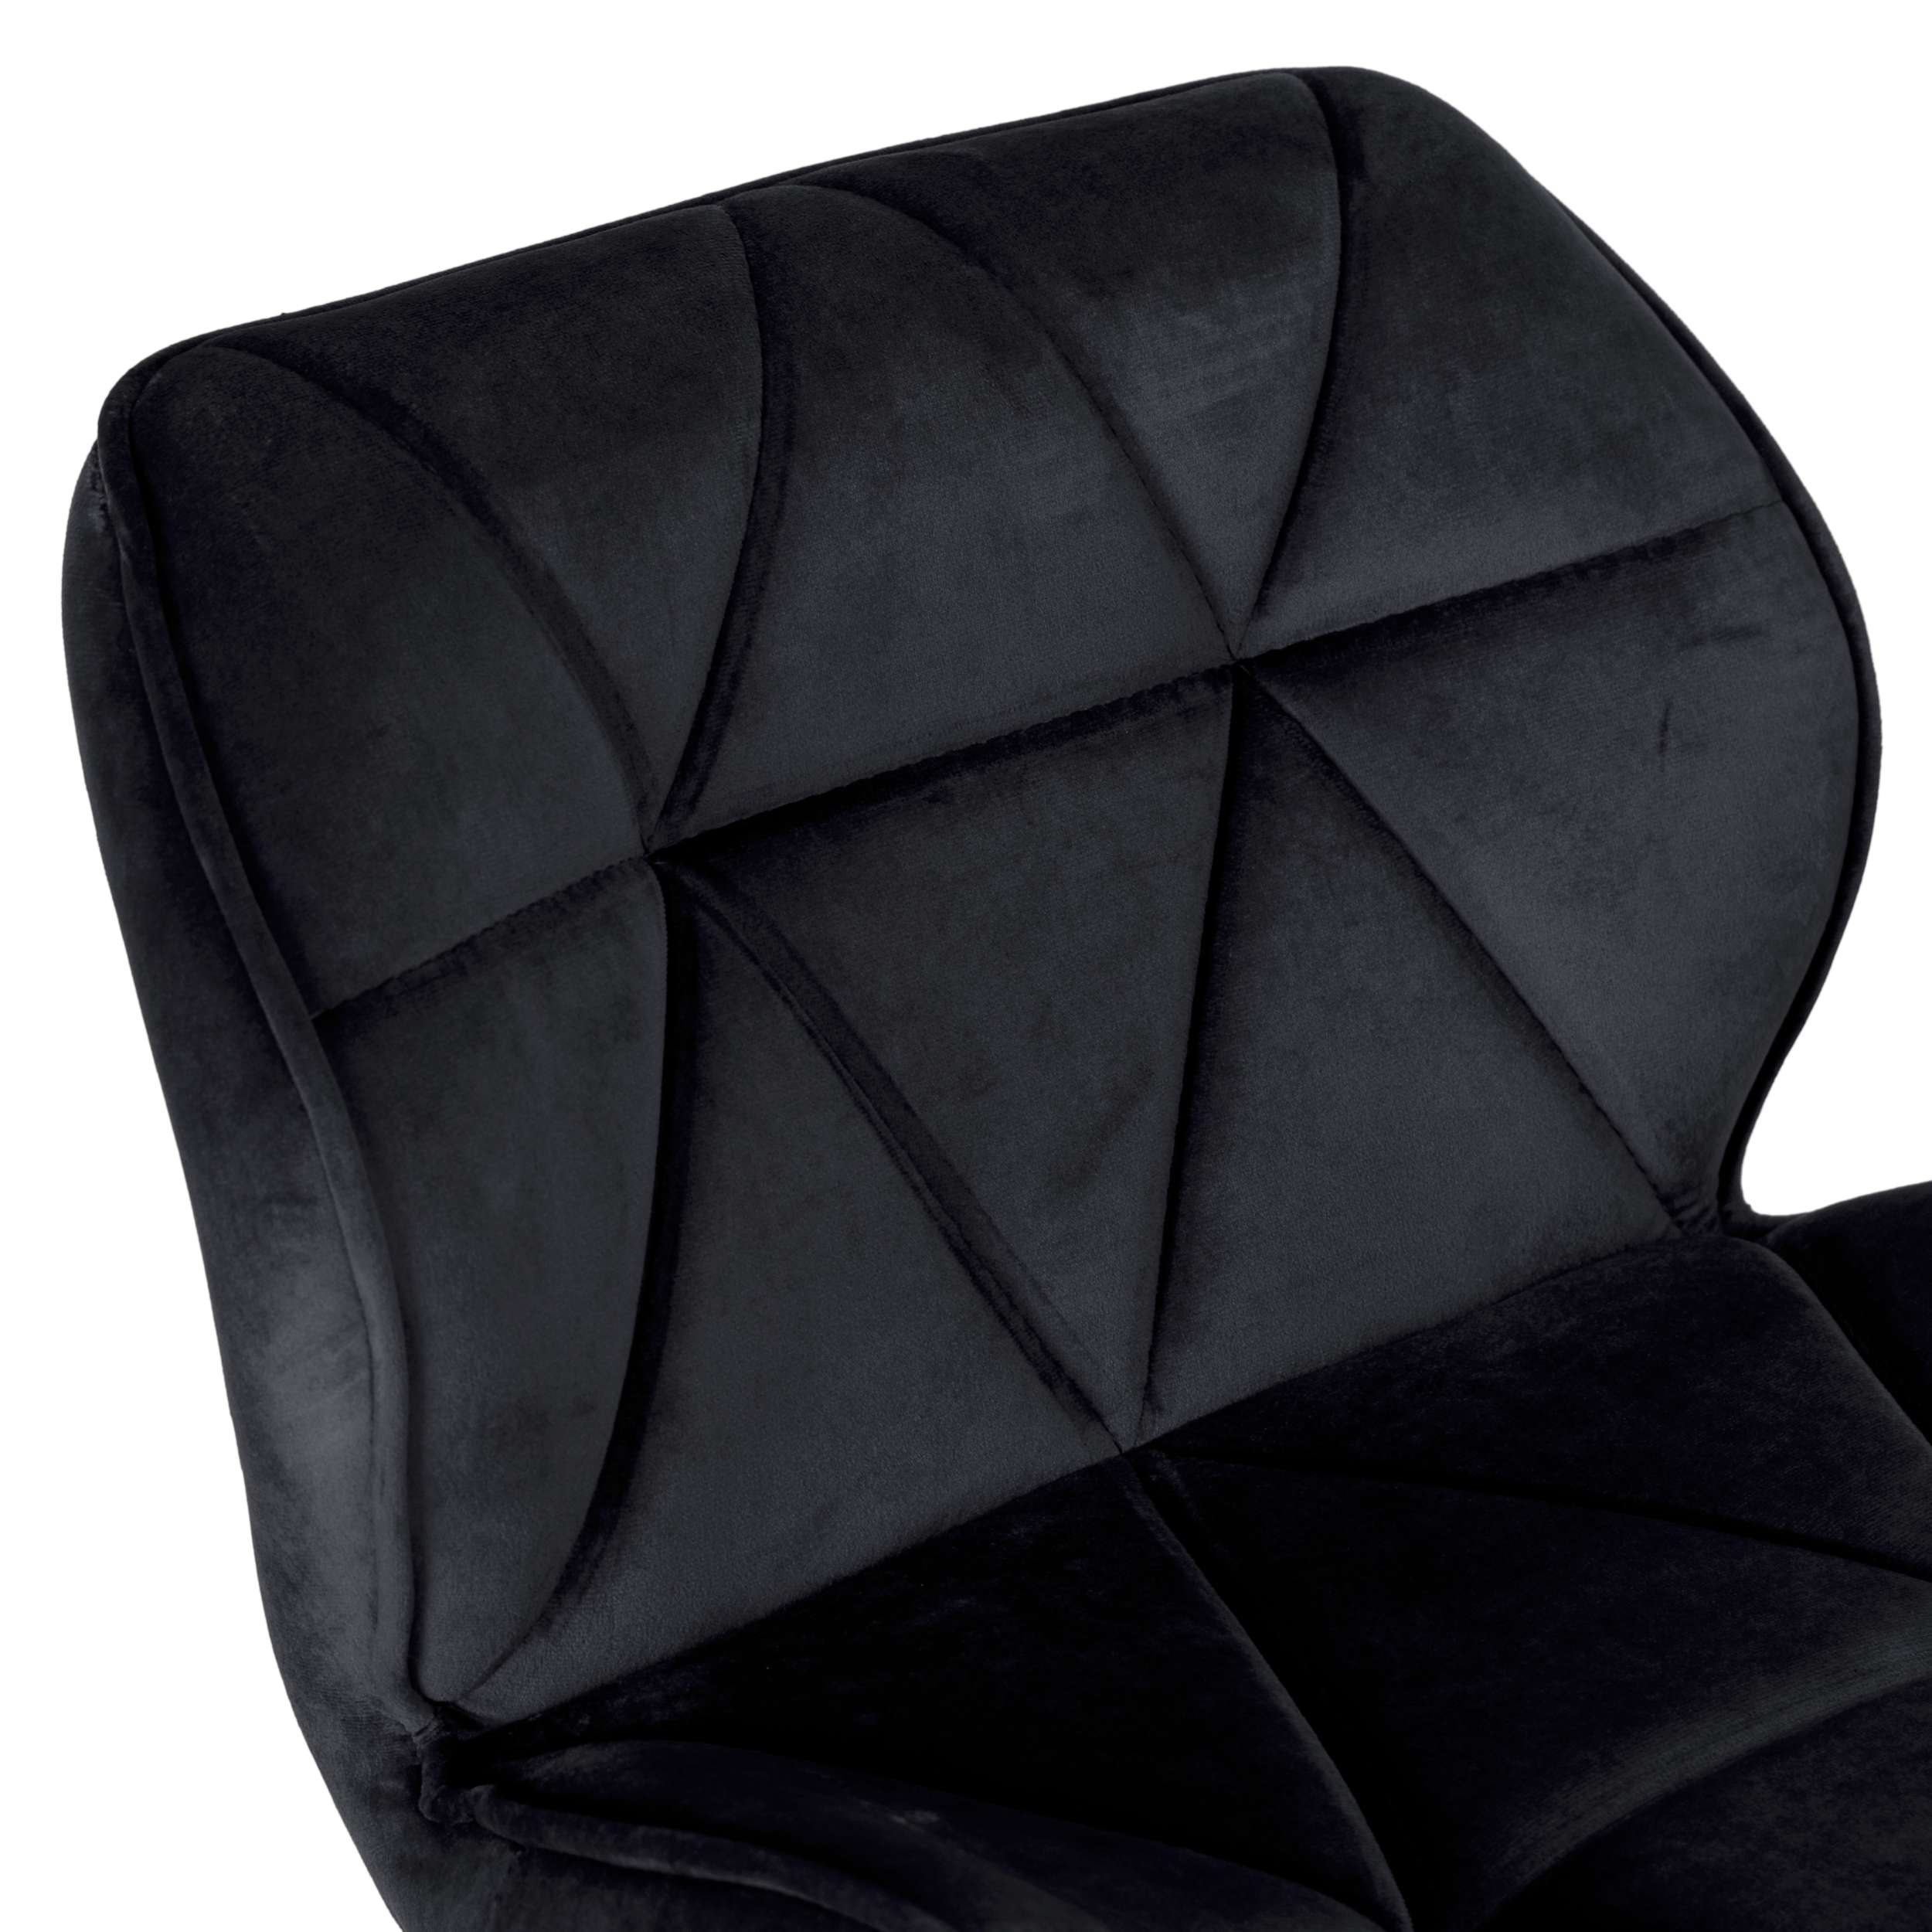 Krzesło barowe GRAPPO aksamitne czarne VELVET